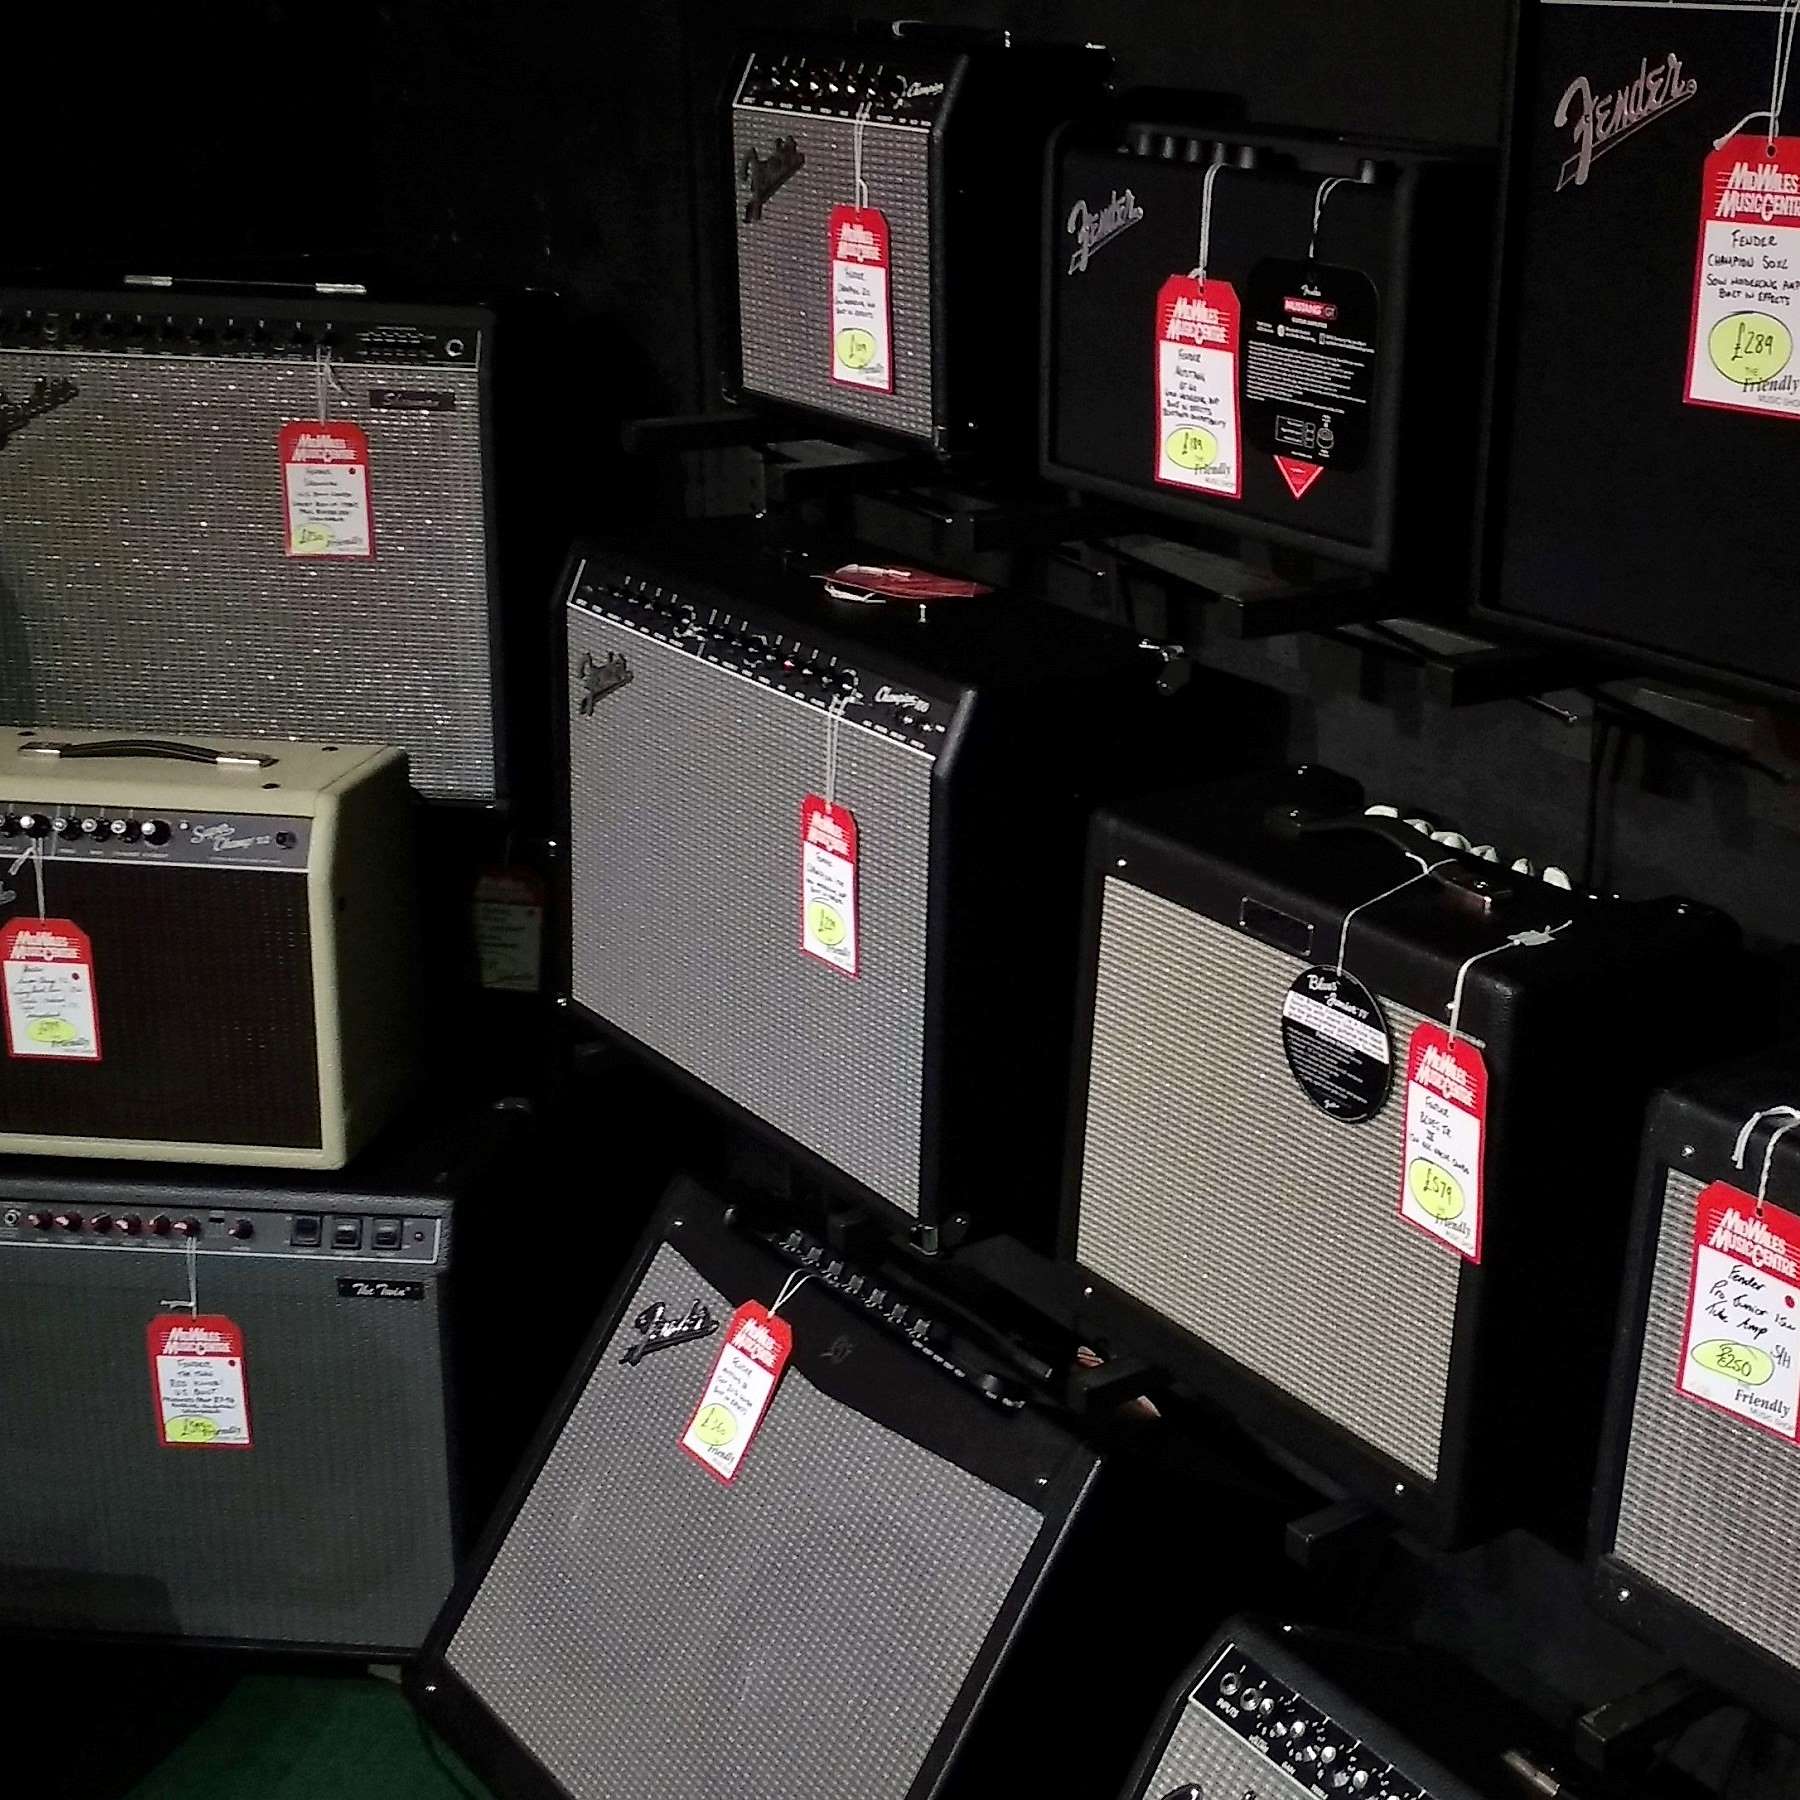 Fender amplifier display